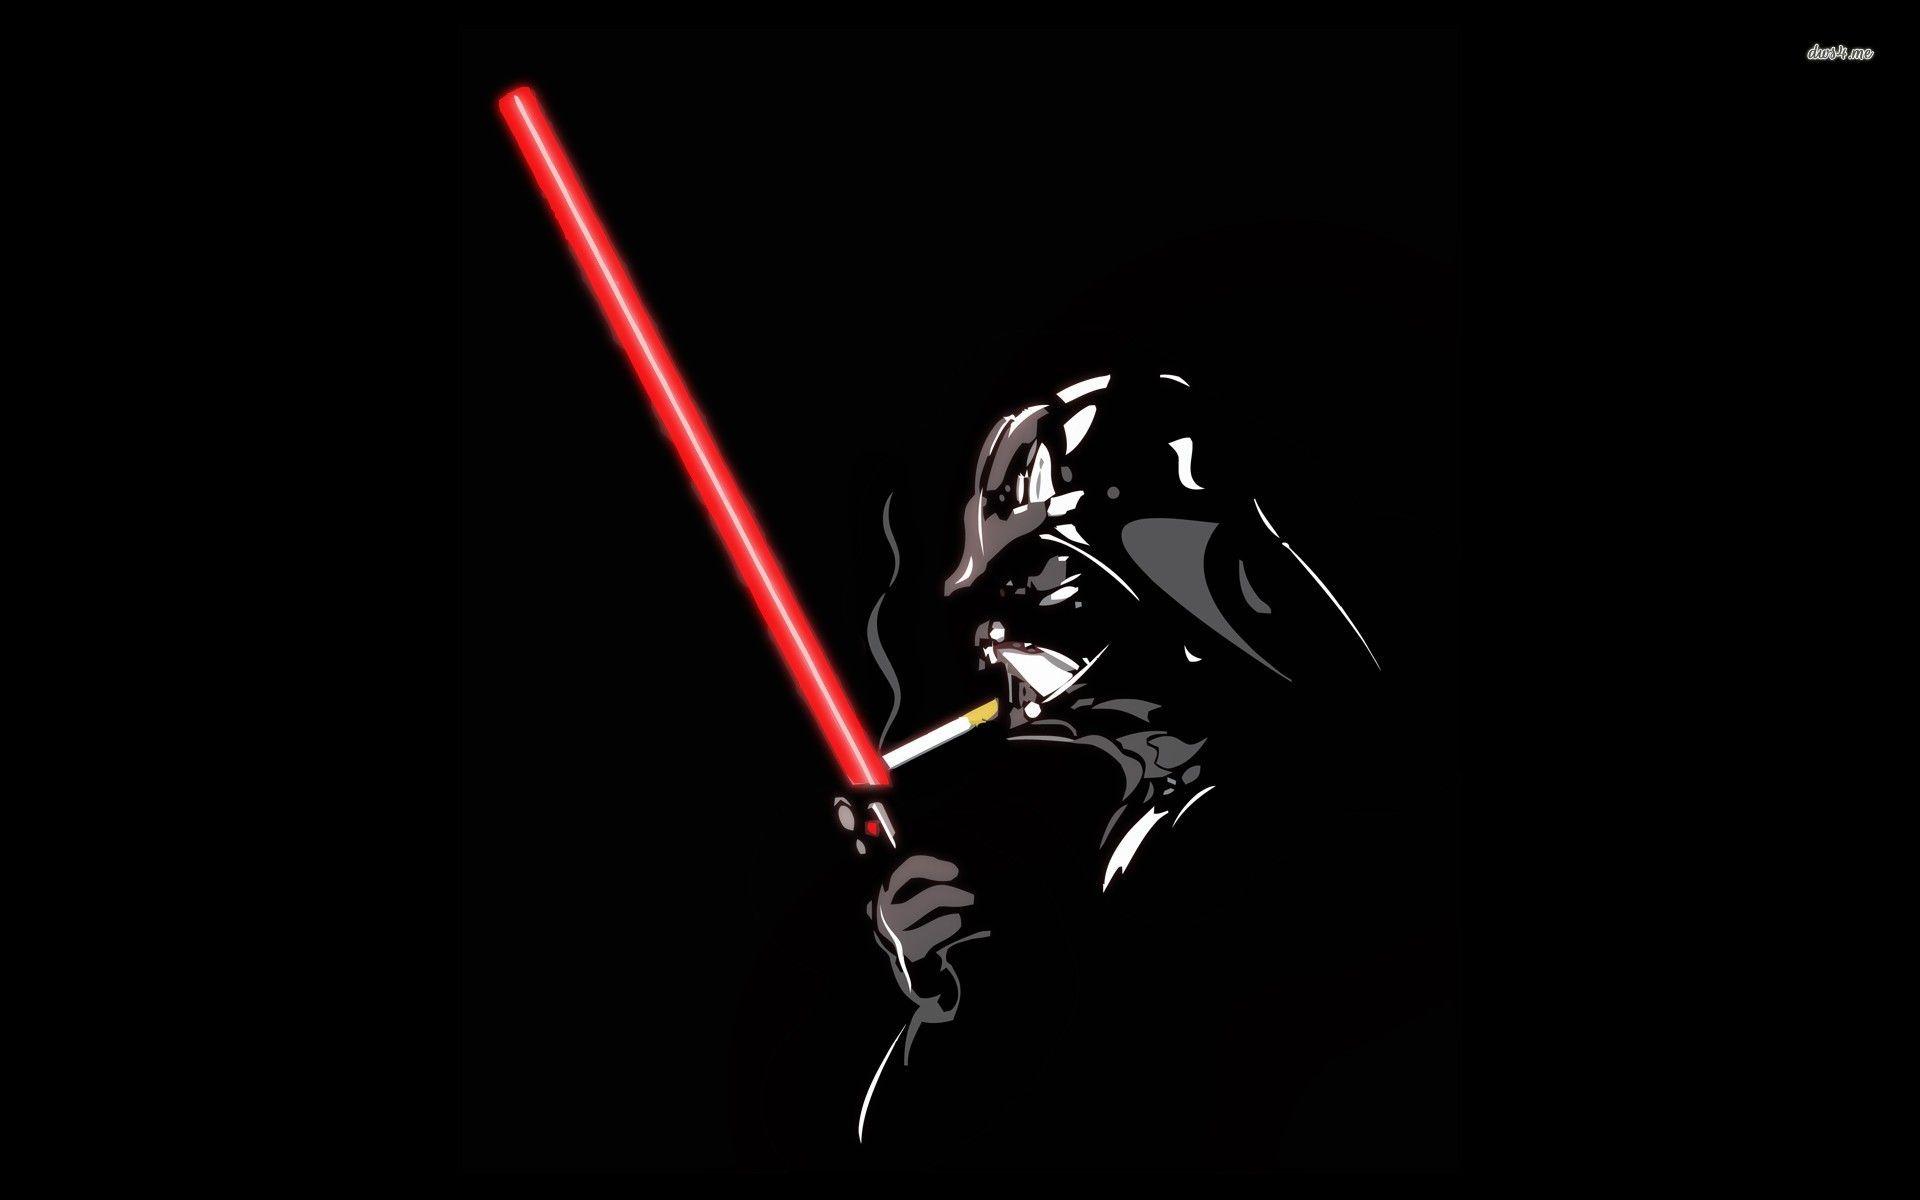 Awesome Darth Vader Image Darth Vader Wallpaper 1920×1080 Dark